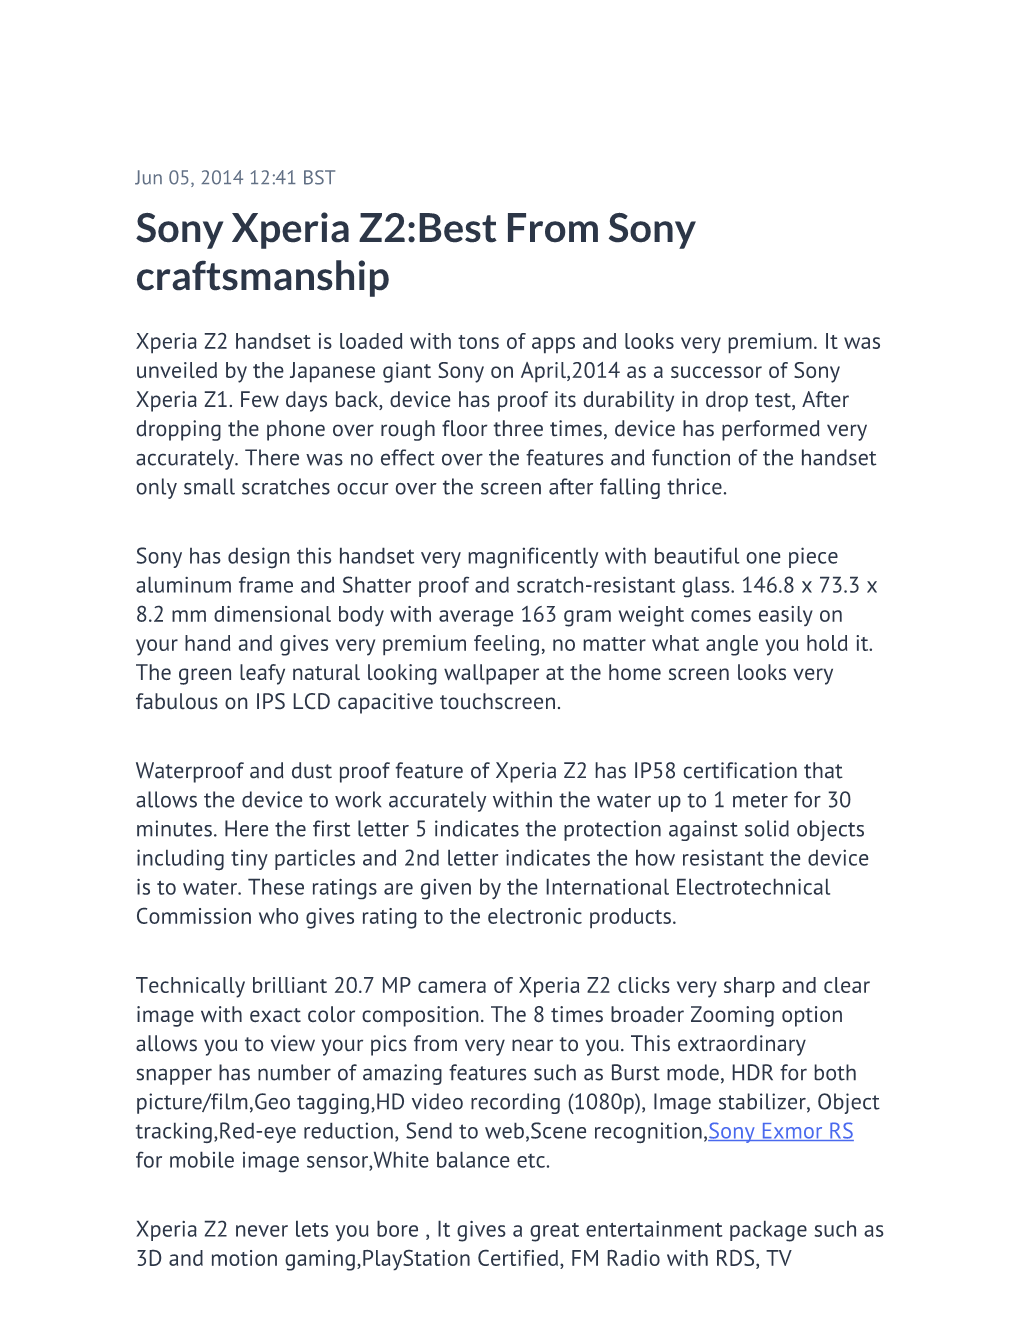 Sony Xperia Z2:Best from Sony Craftsmanship